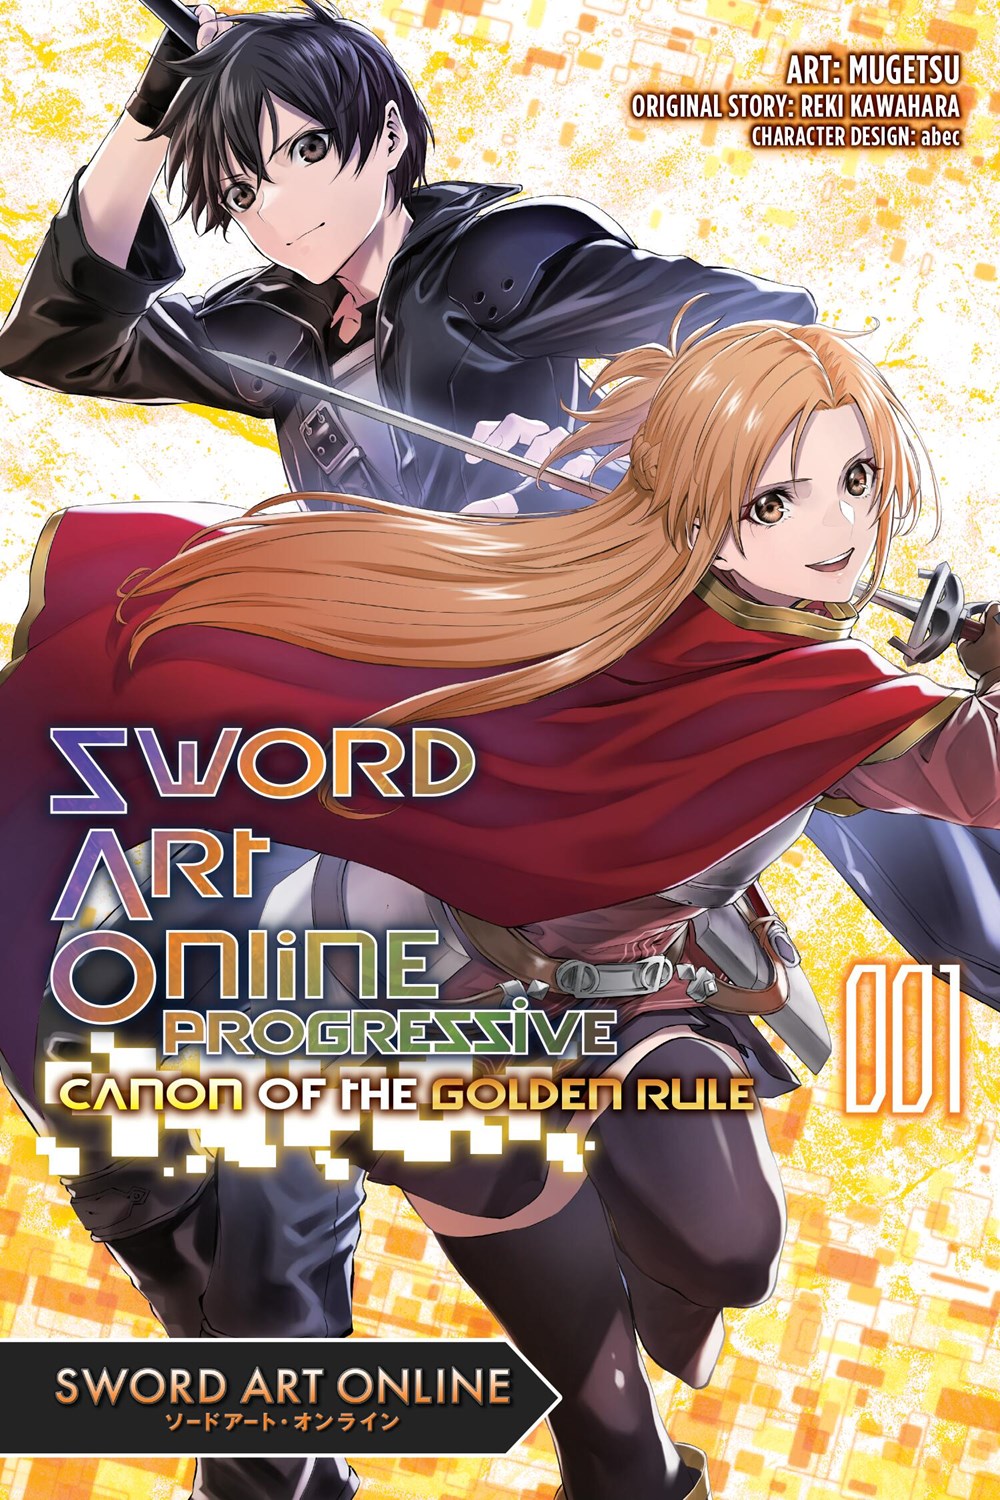 Sword Art Online Manga: Sword Art Online: Aincrad (Manga